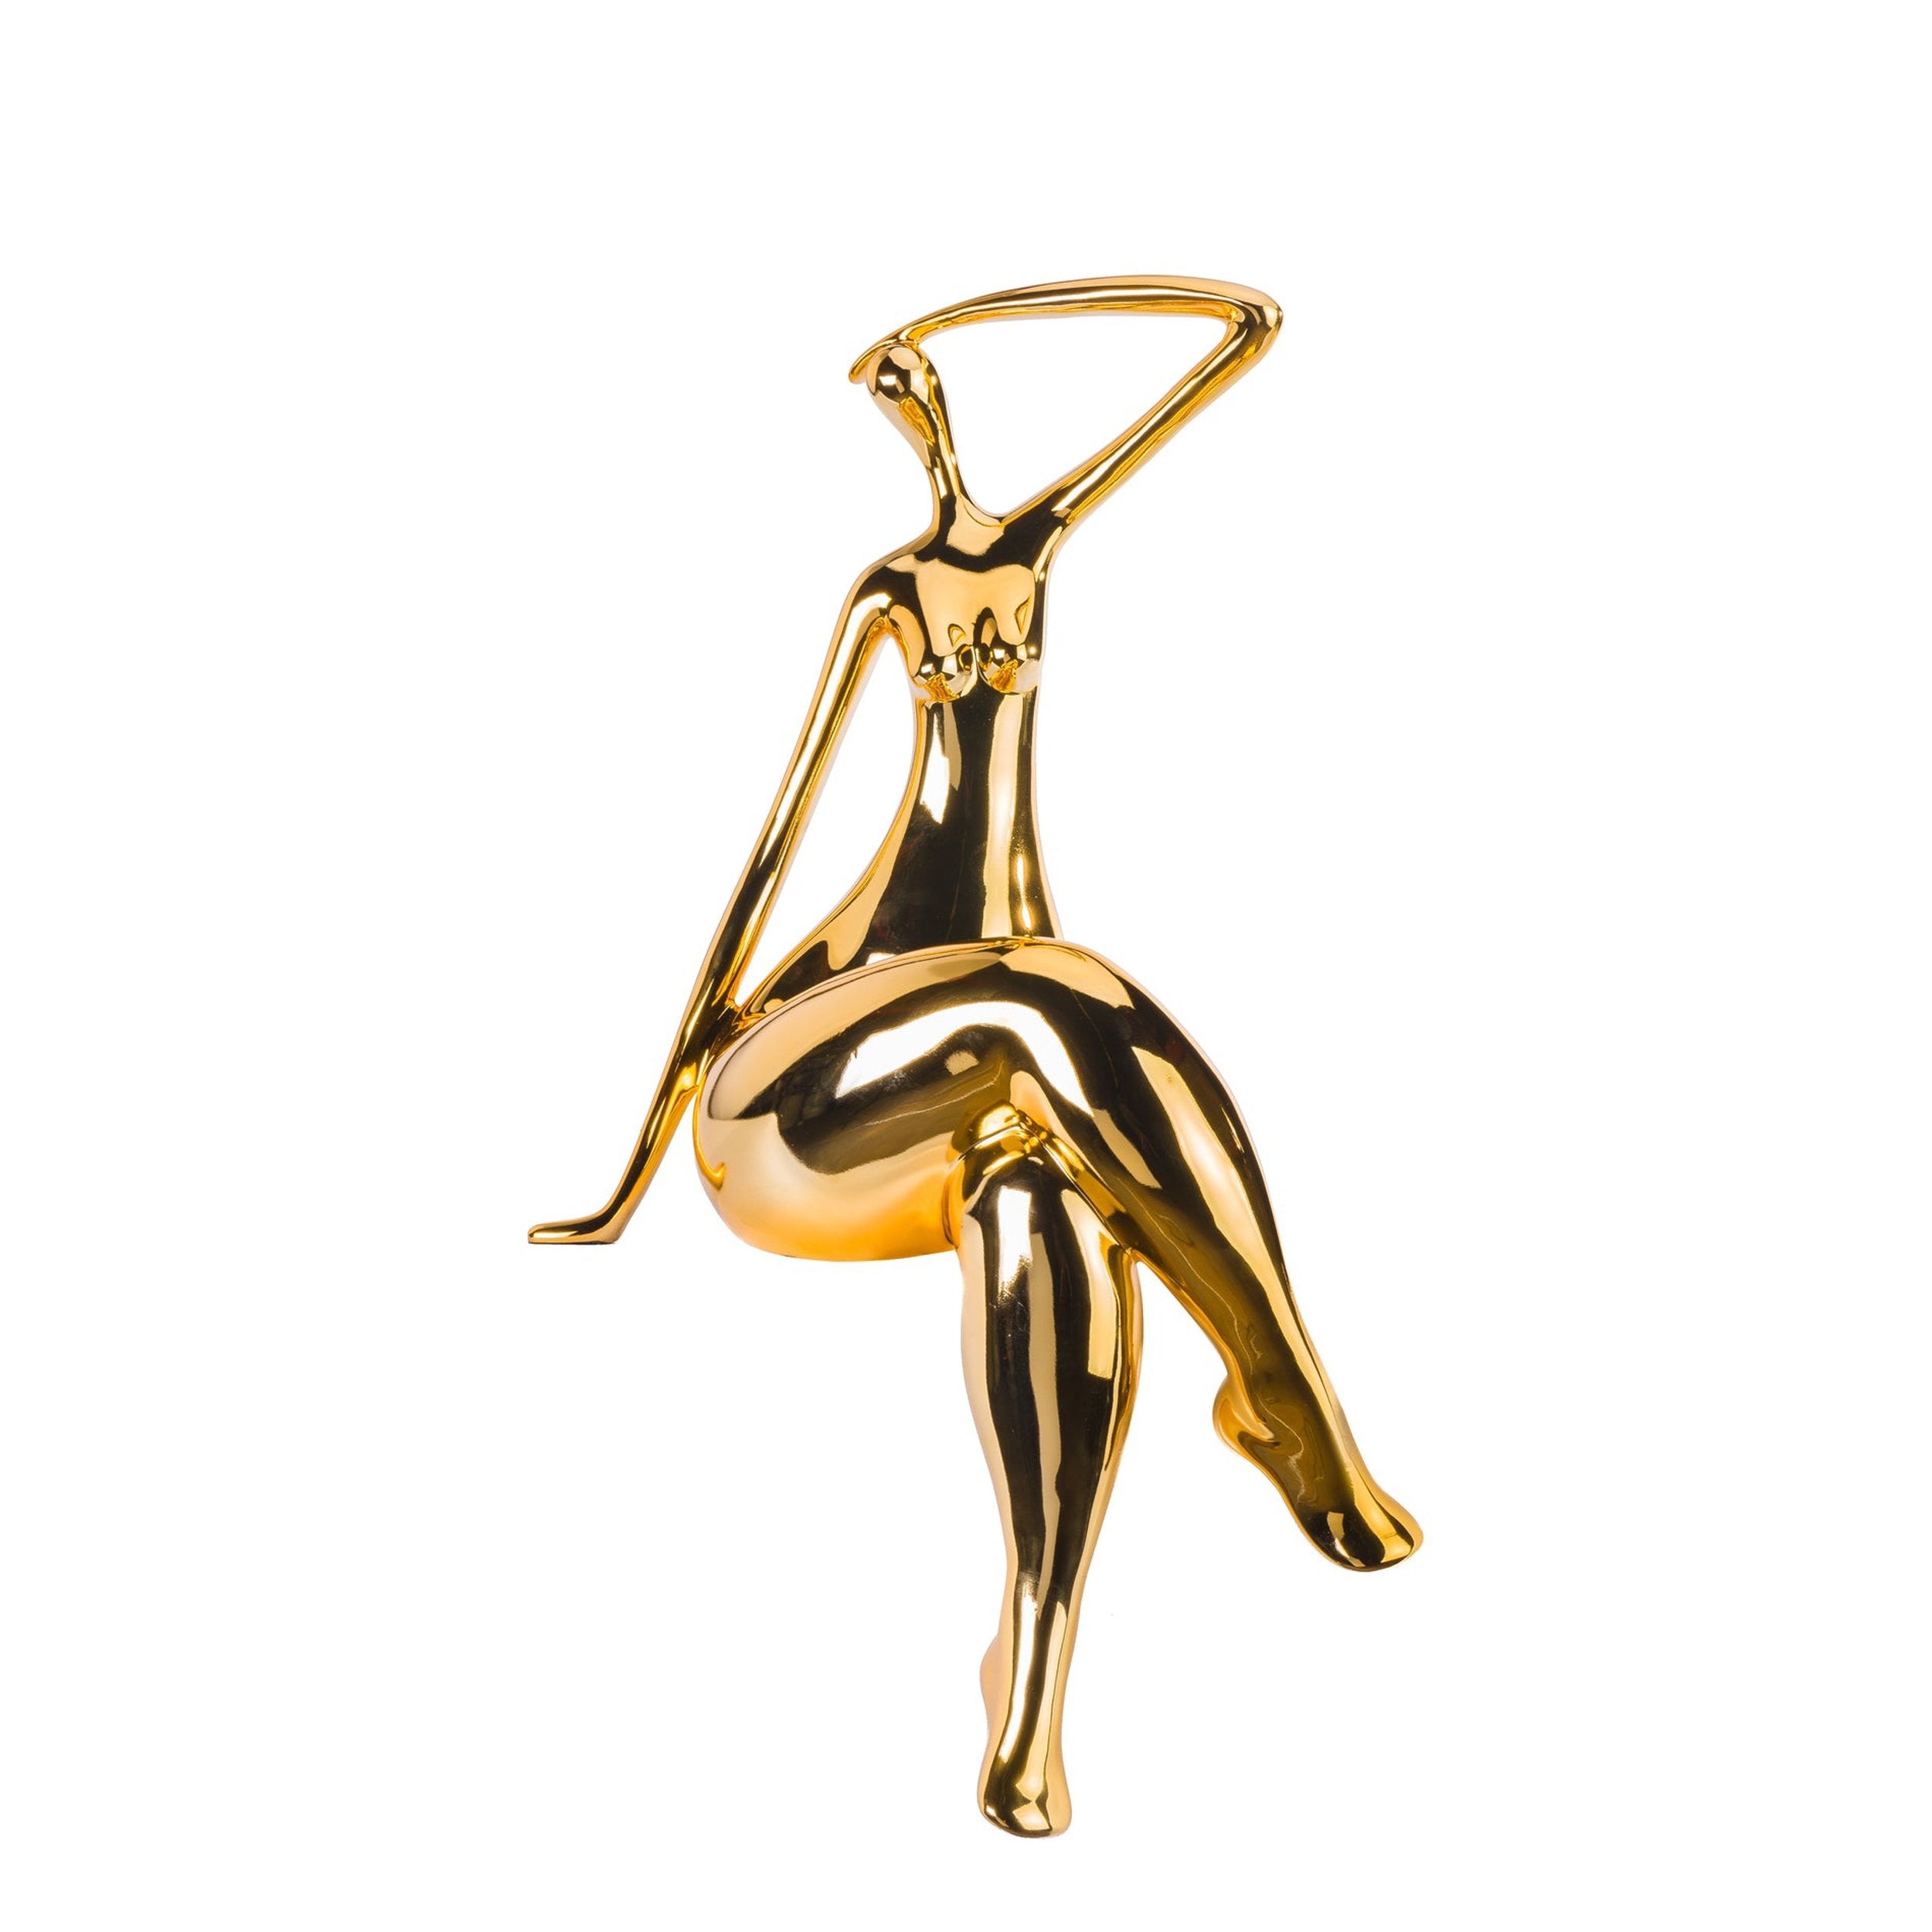 Isabella Sculpture // Small Gold